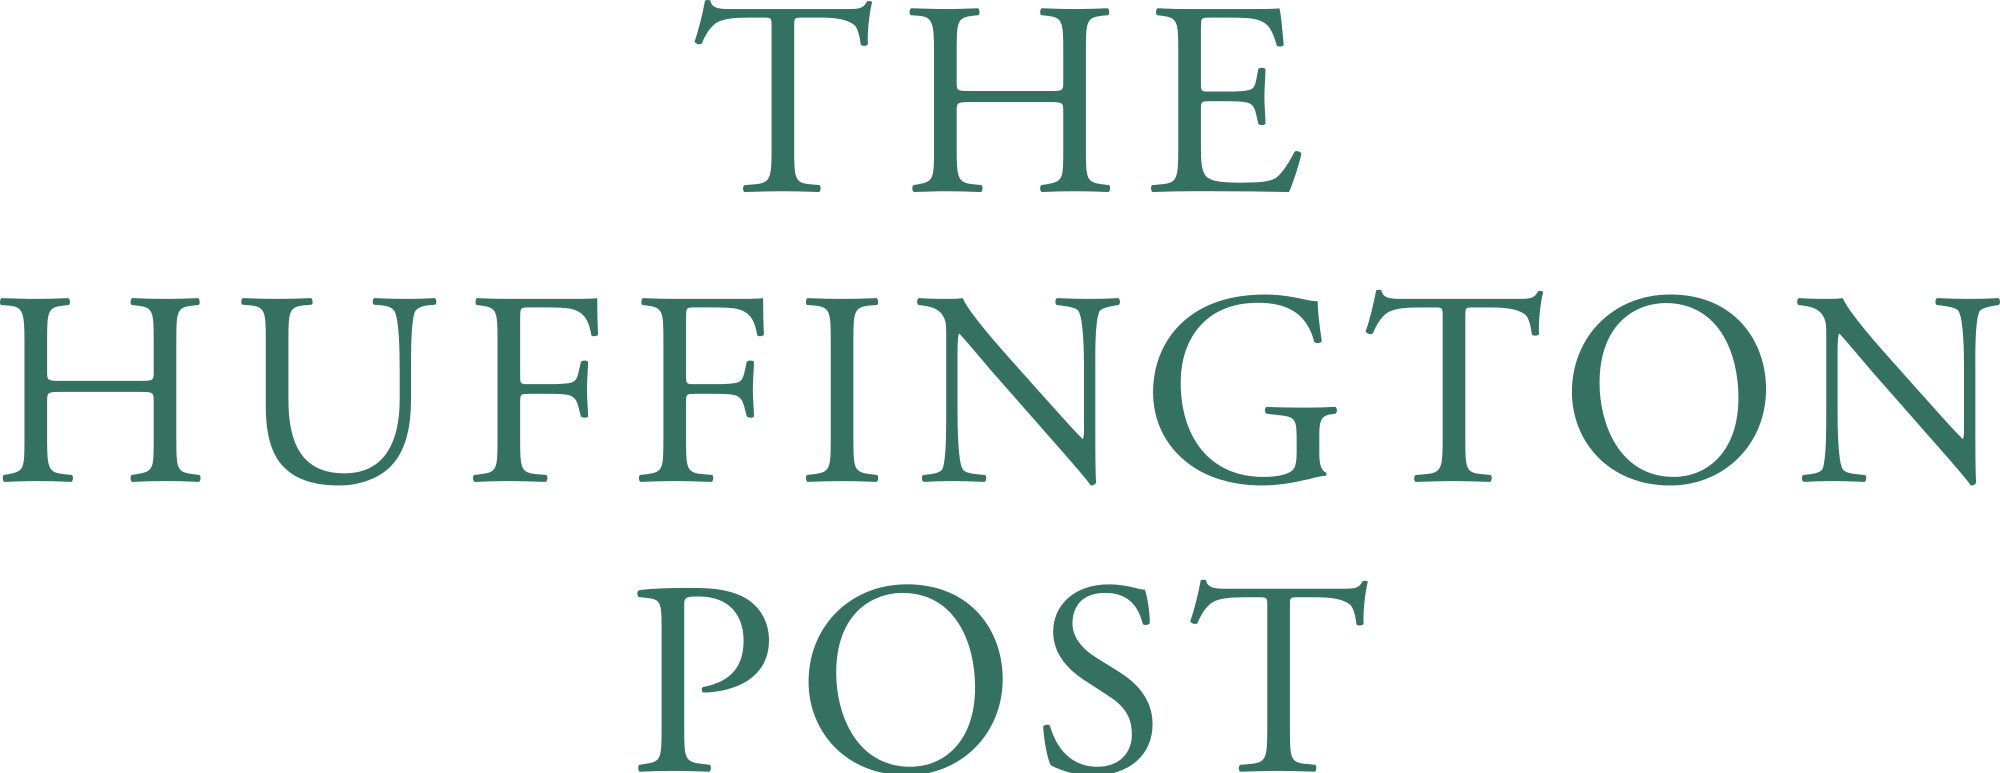 The_Huffington_Post_logo.svg.png